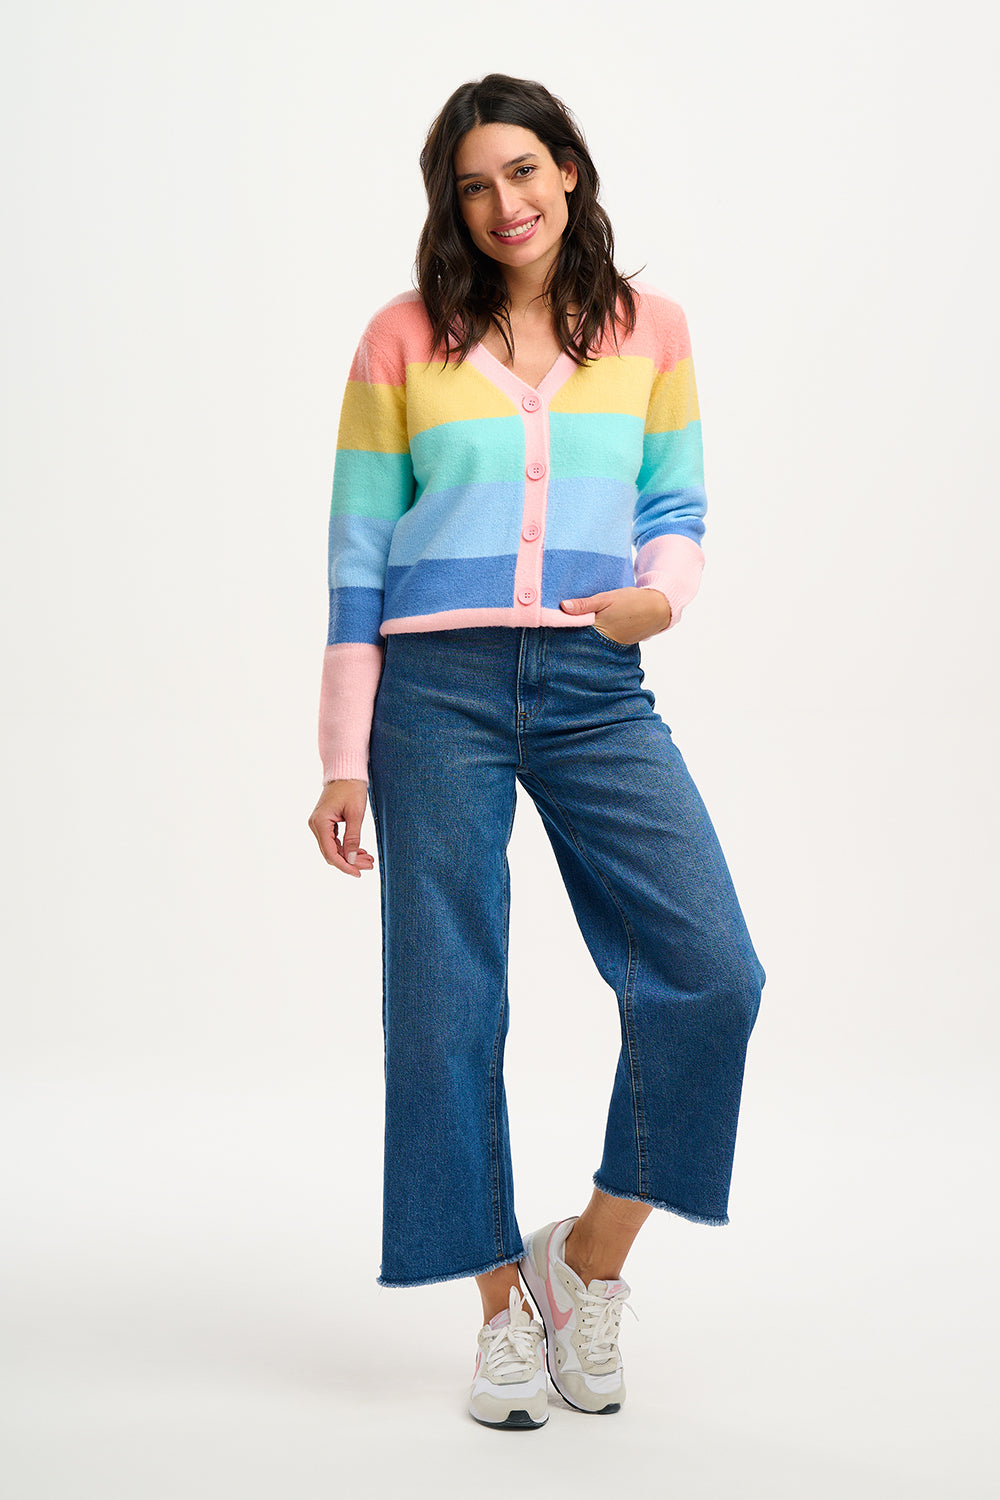 Izzy Multi Pastel Rainbow Stripe Cardigan | Sugarhill Boutique